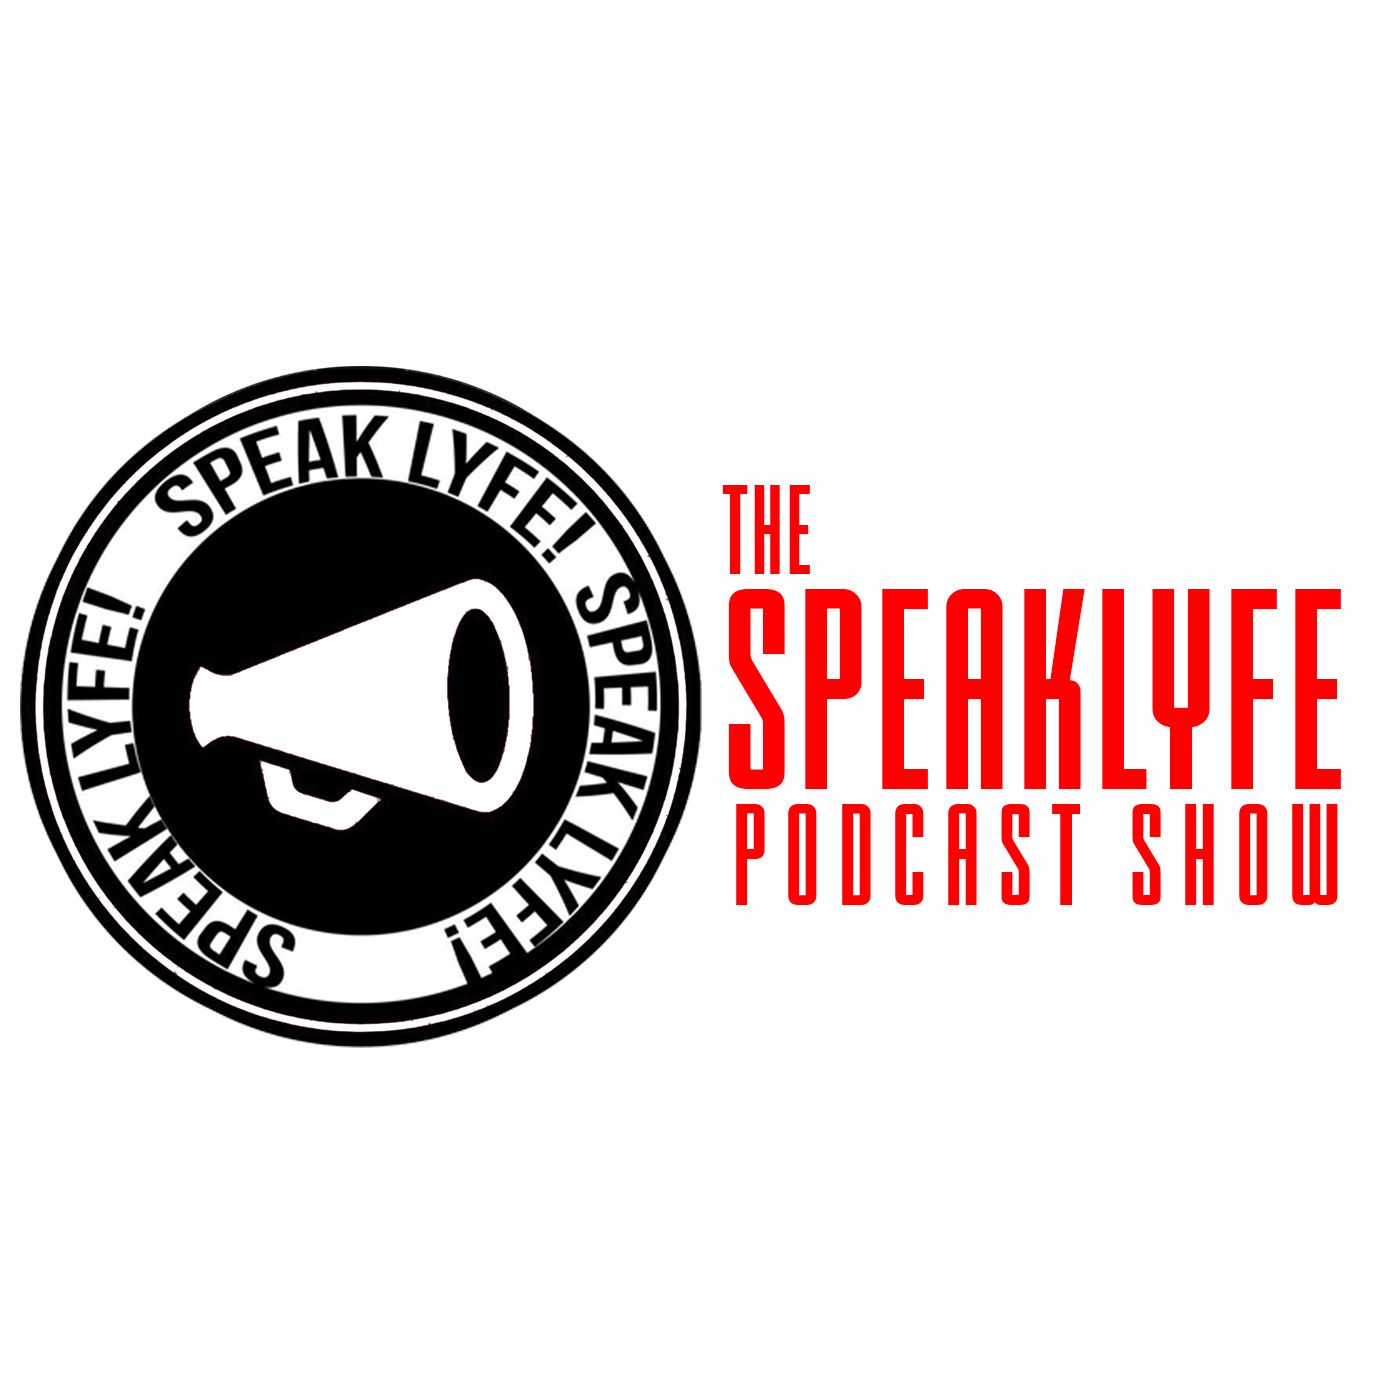 The SpeakLyfe Podcast